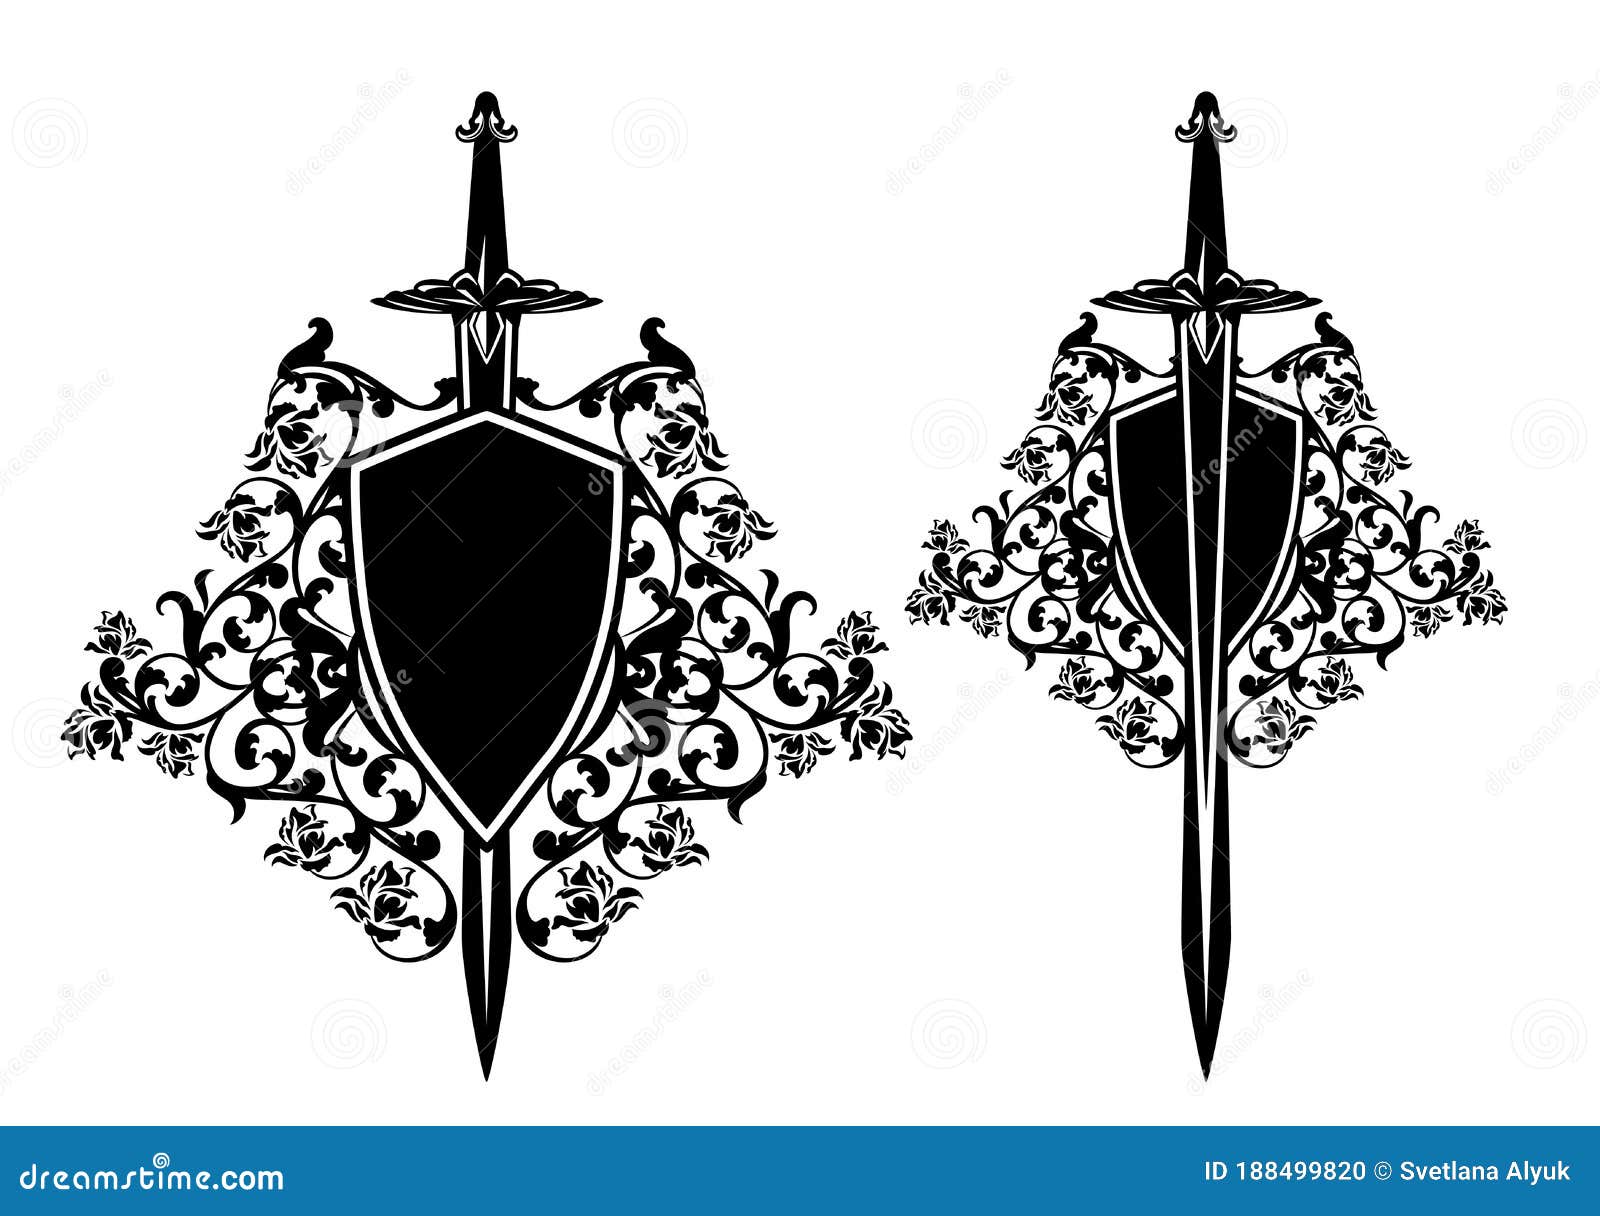 heraldic arm with sword